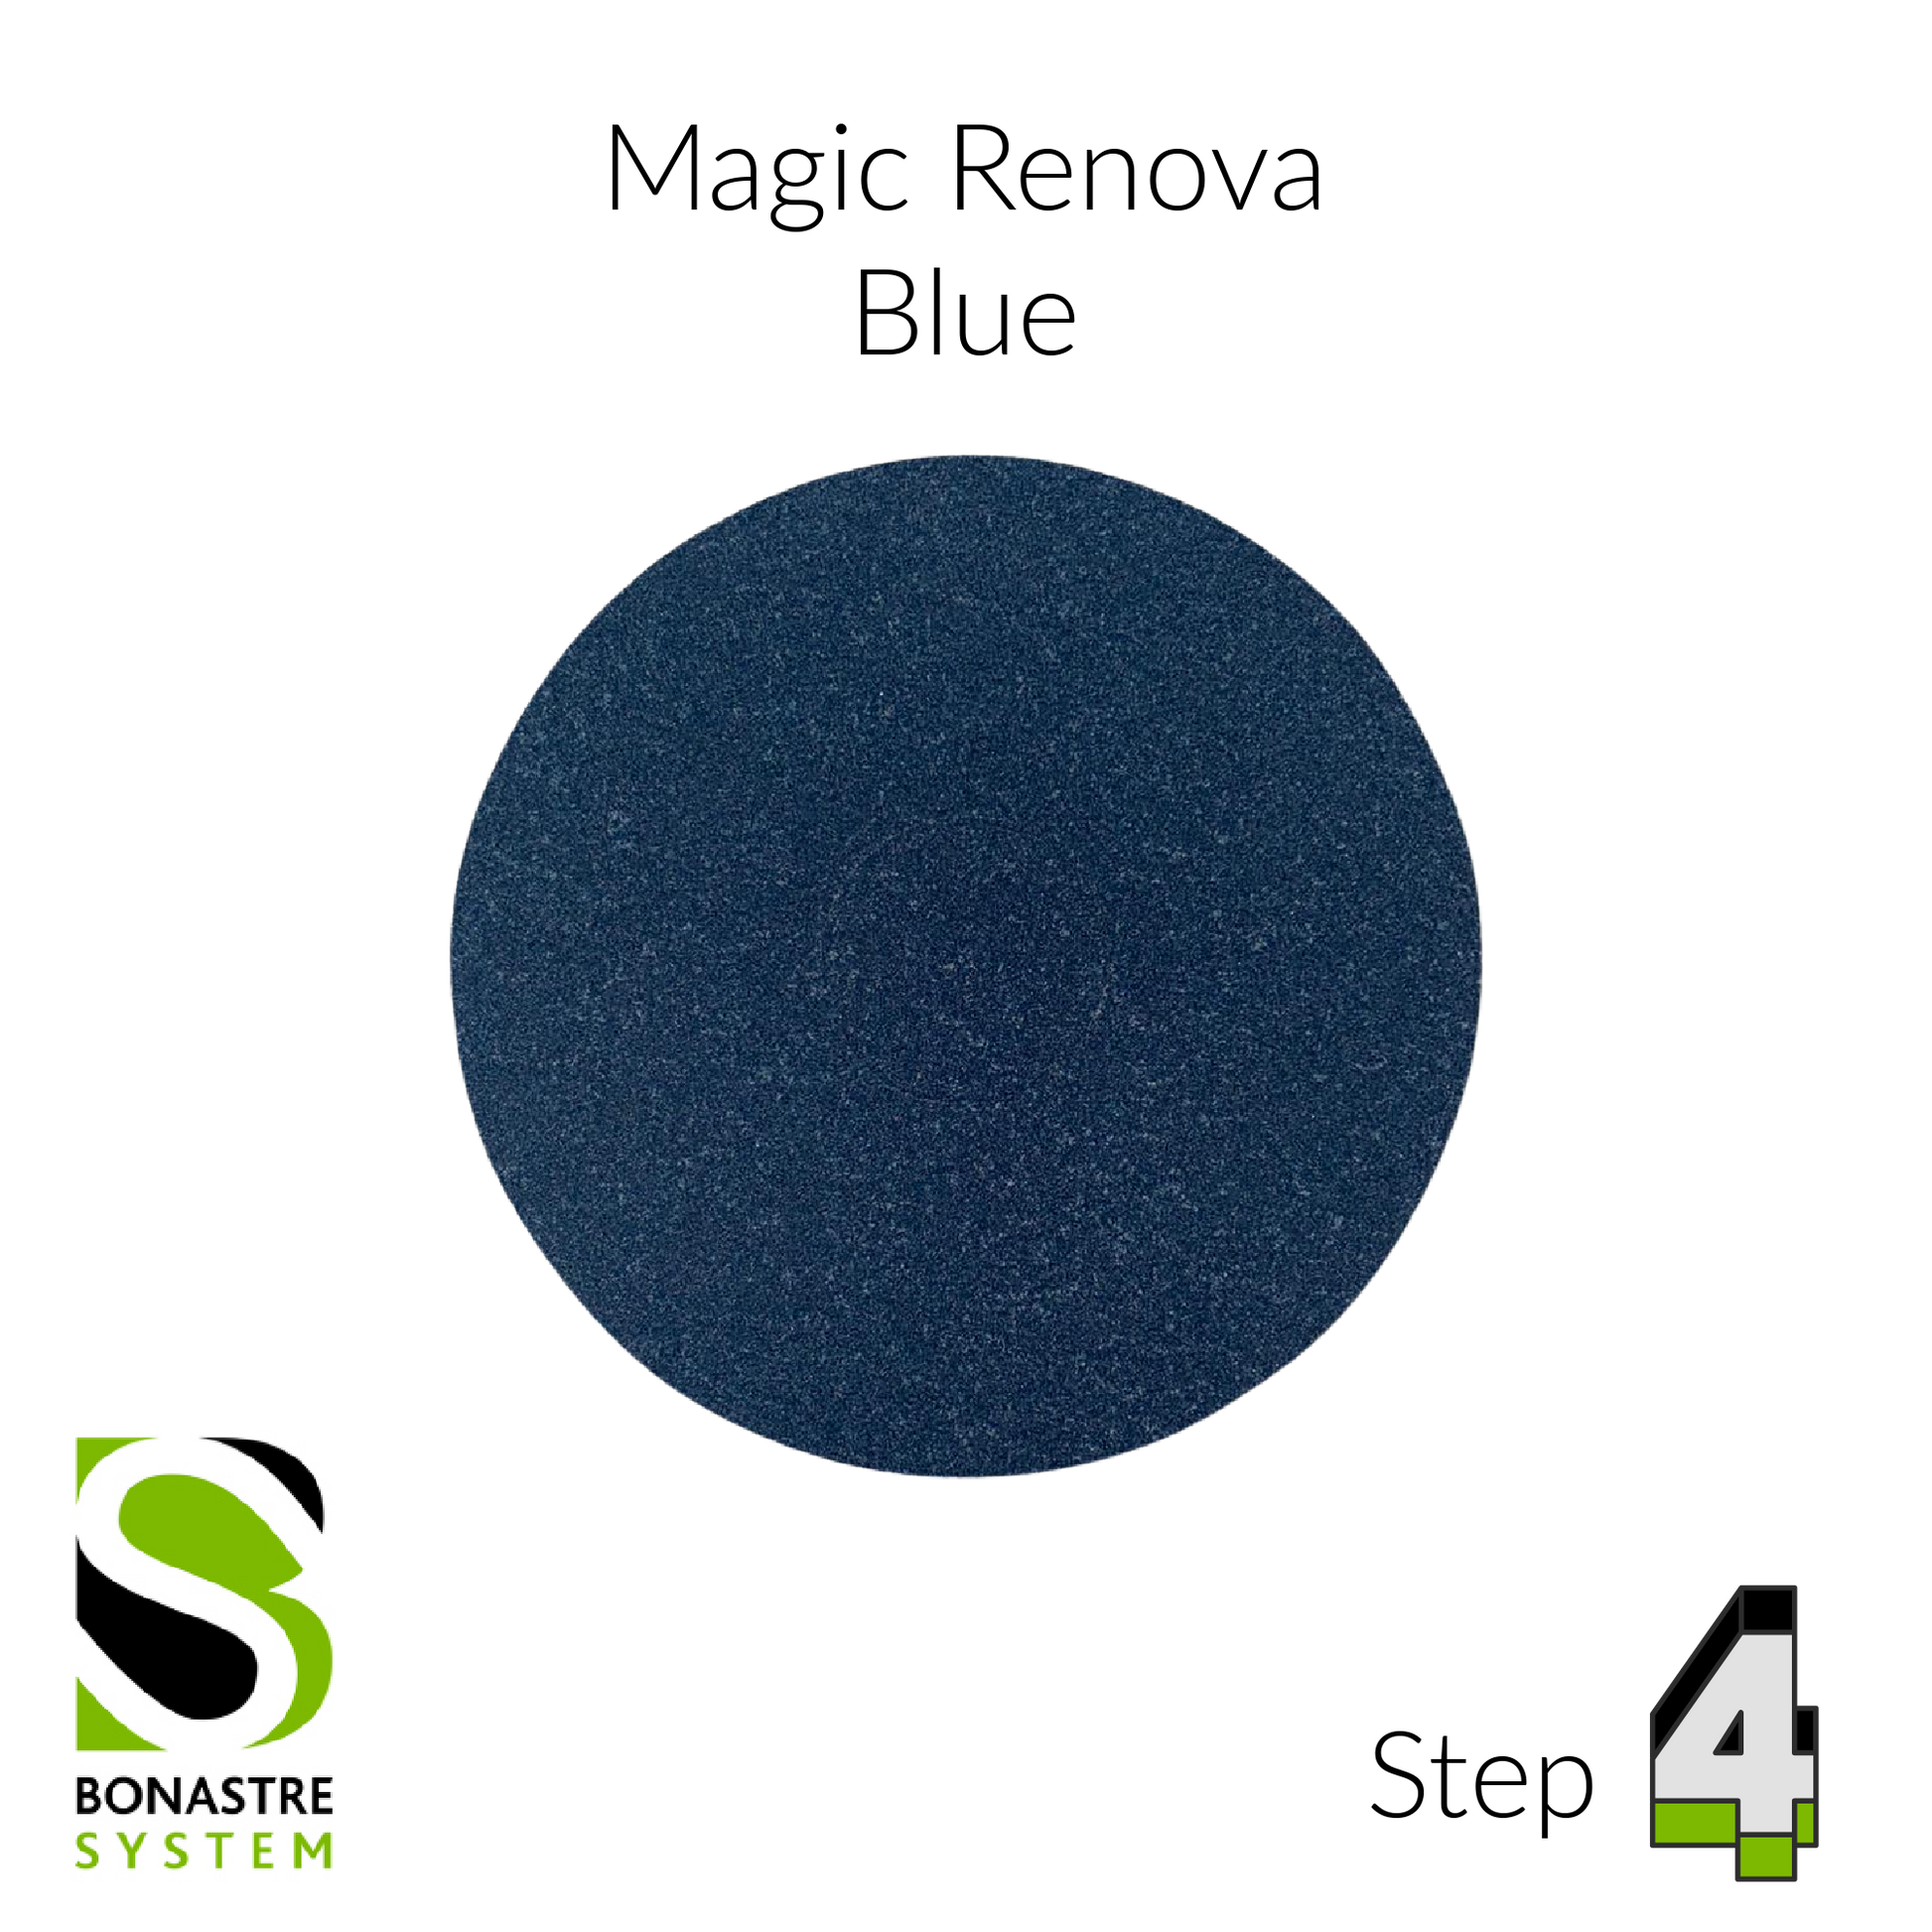 Bonastre Magic Renova 5" Single Discs For Natural Stone Polishing - Clean Center